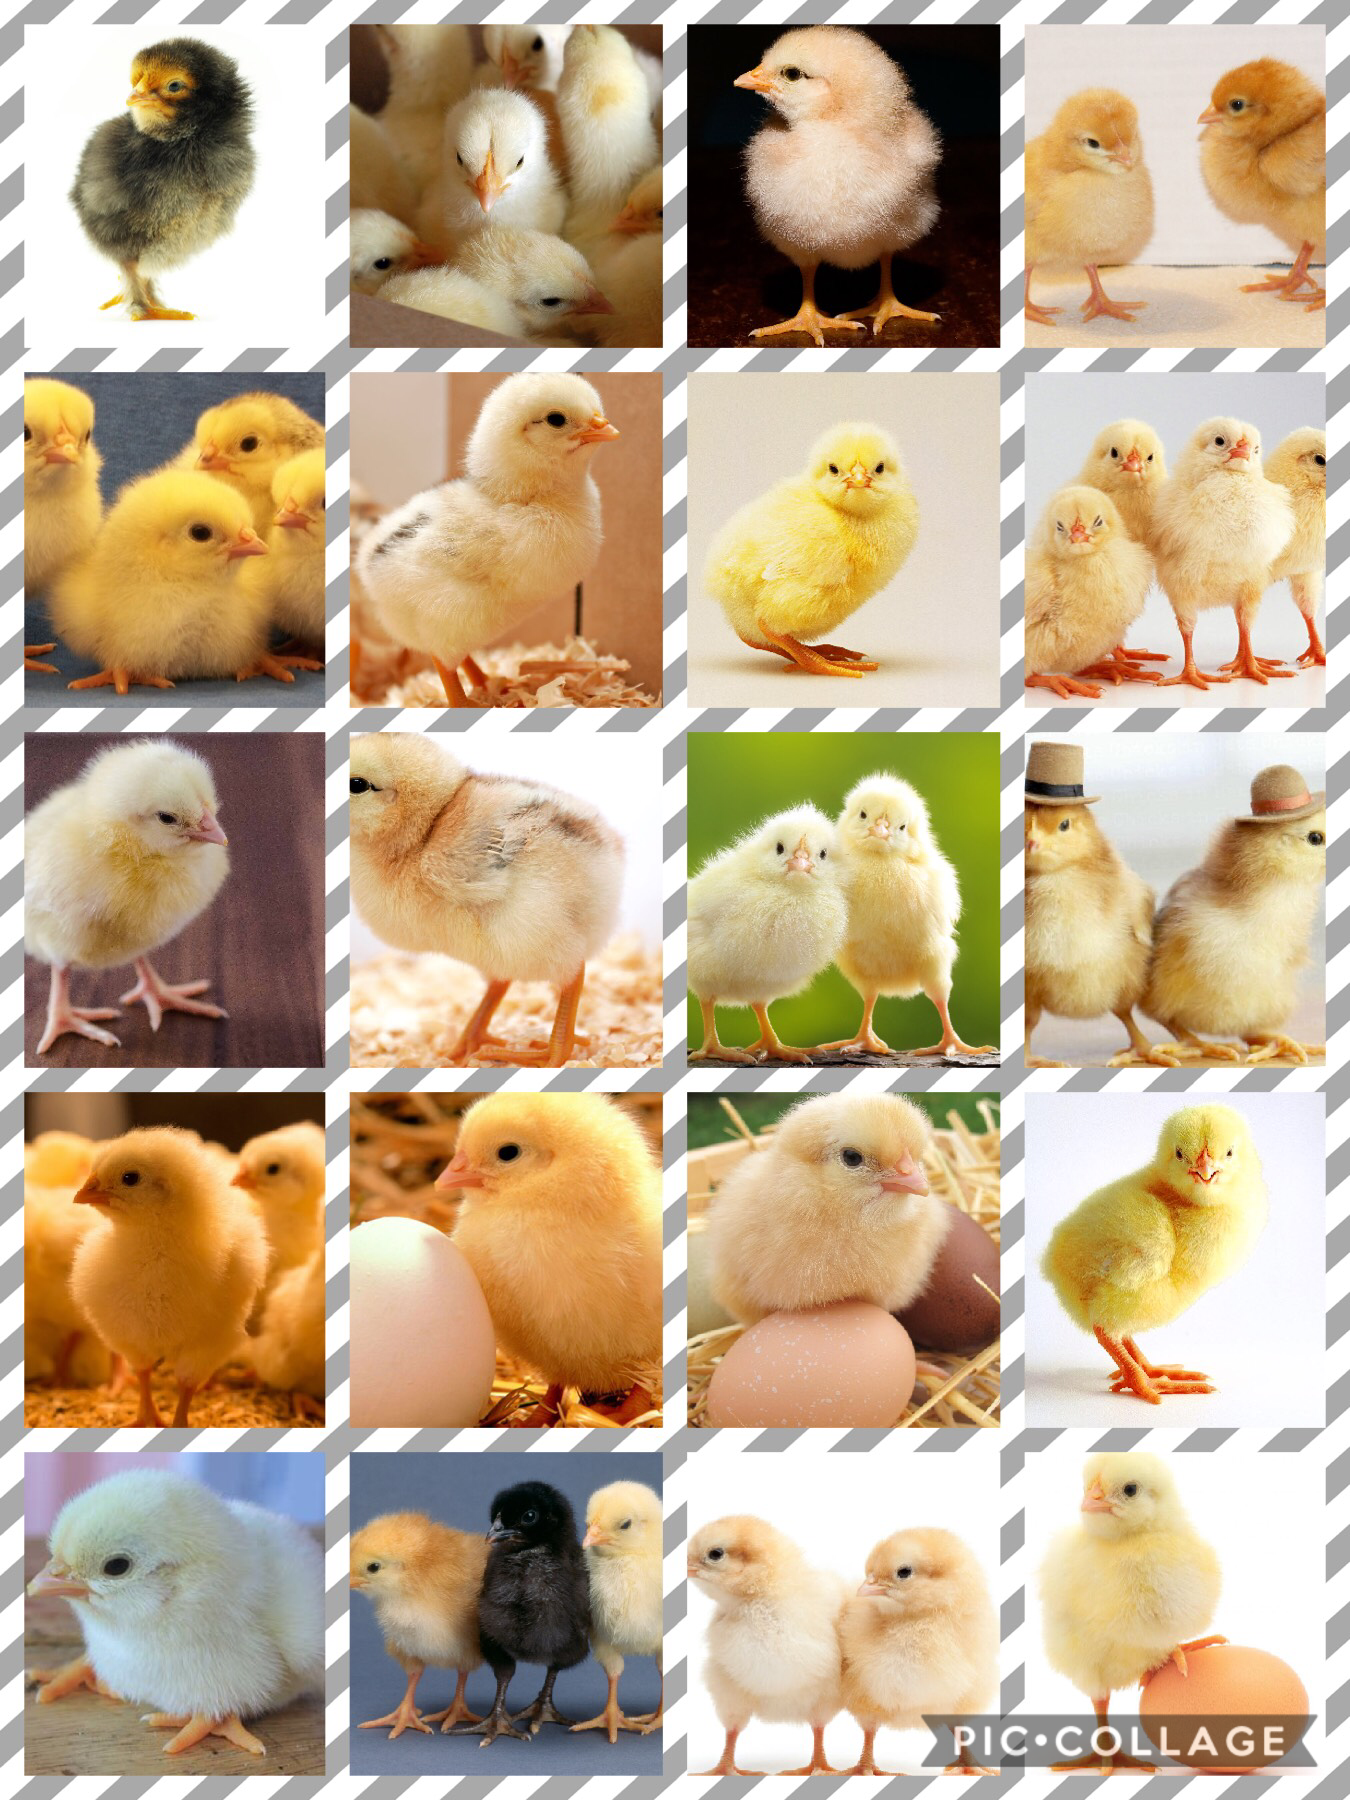 I love chicks 🐥 